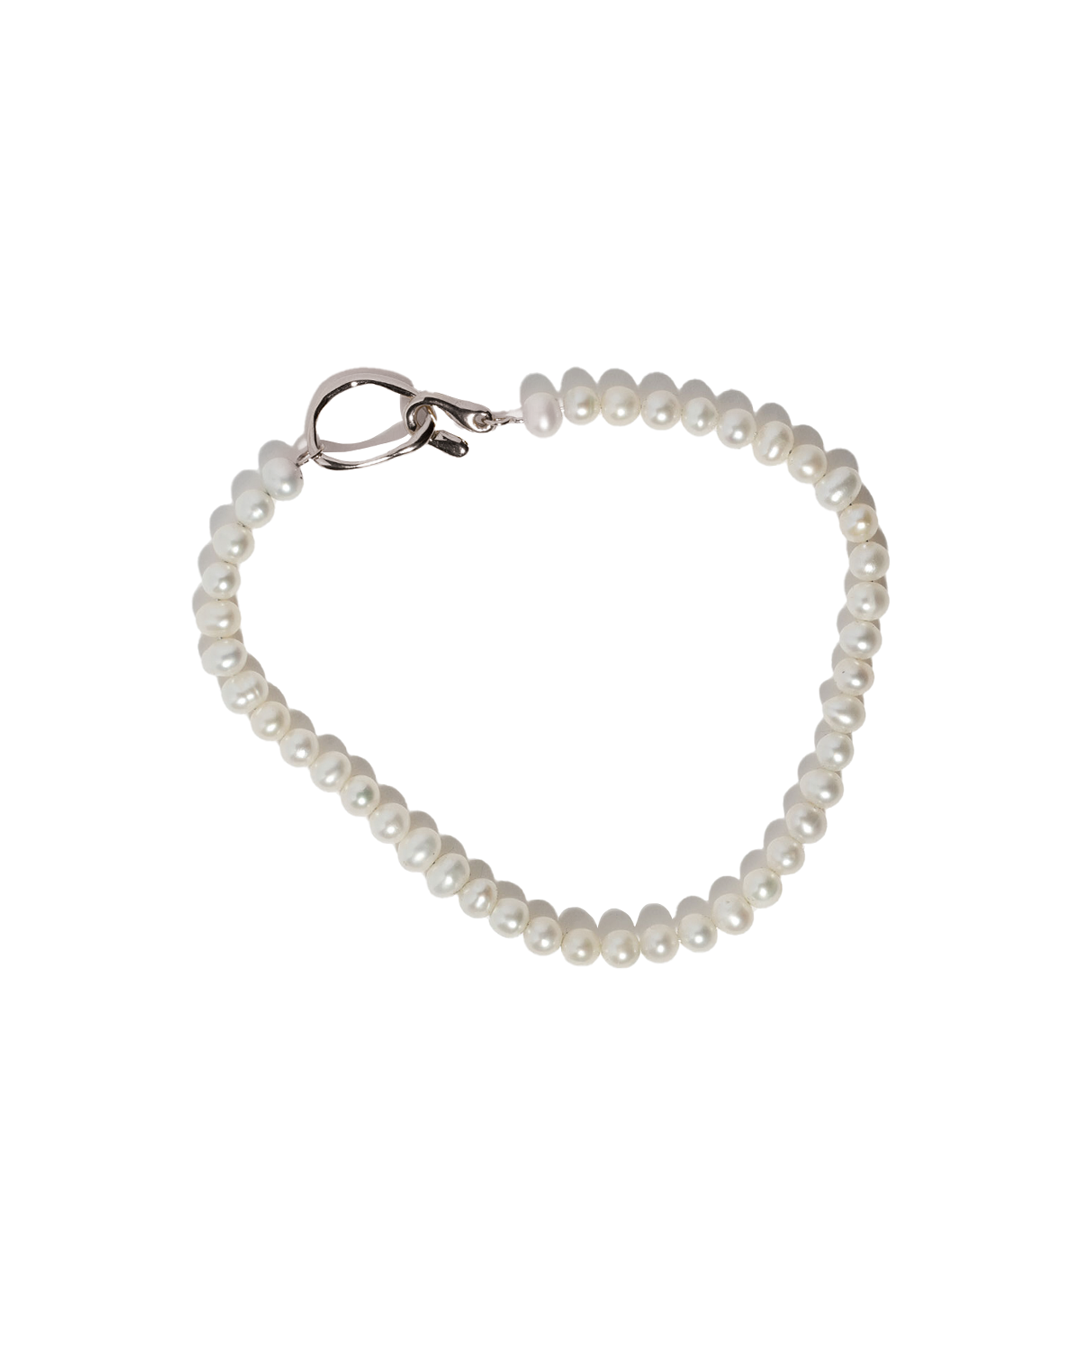 SEED Bracelet Sterling Silver/Pearl 7.5"